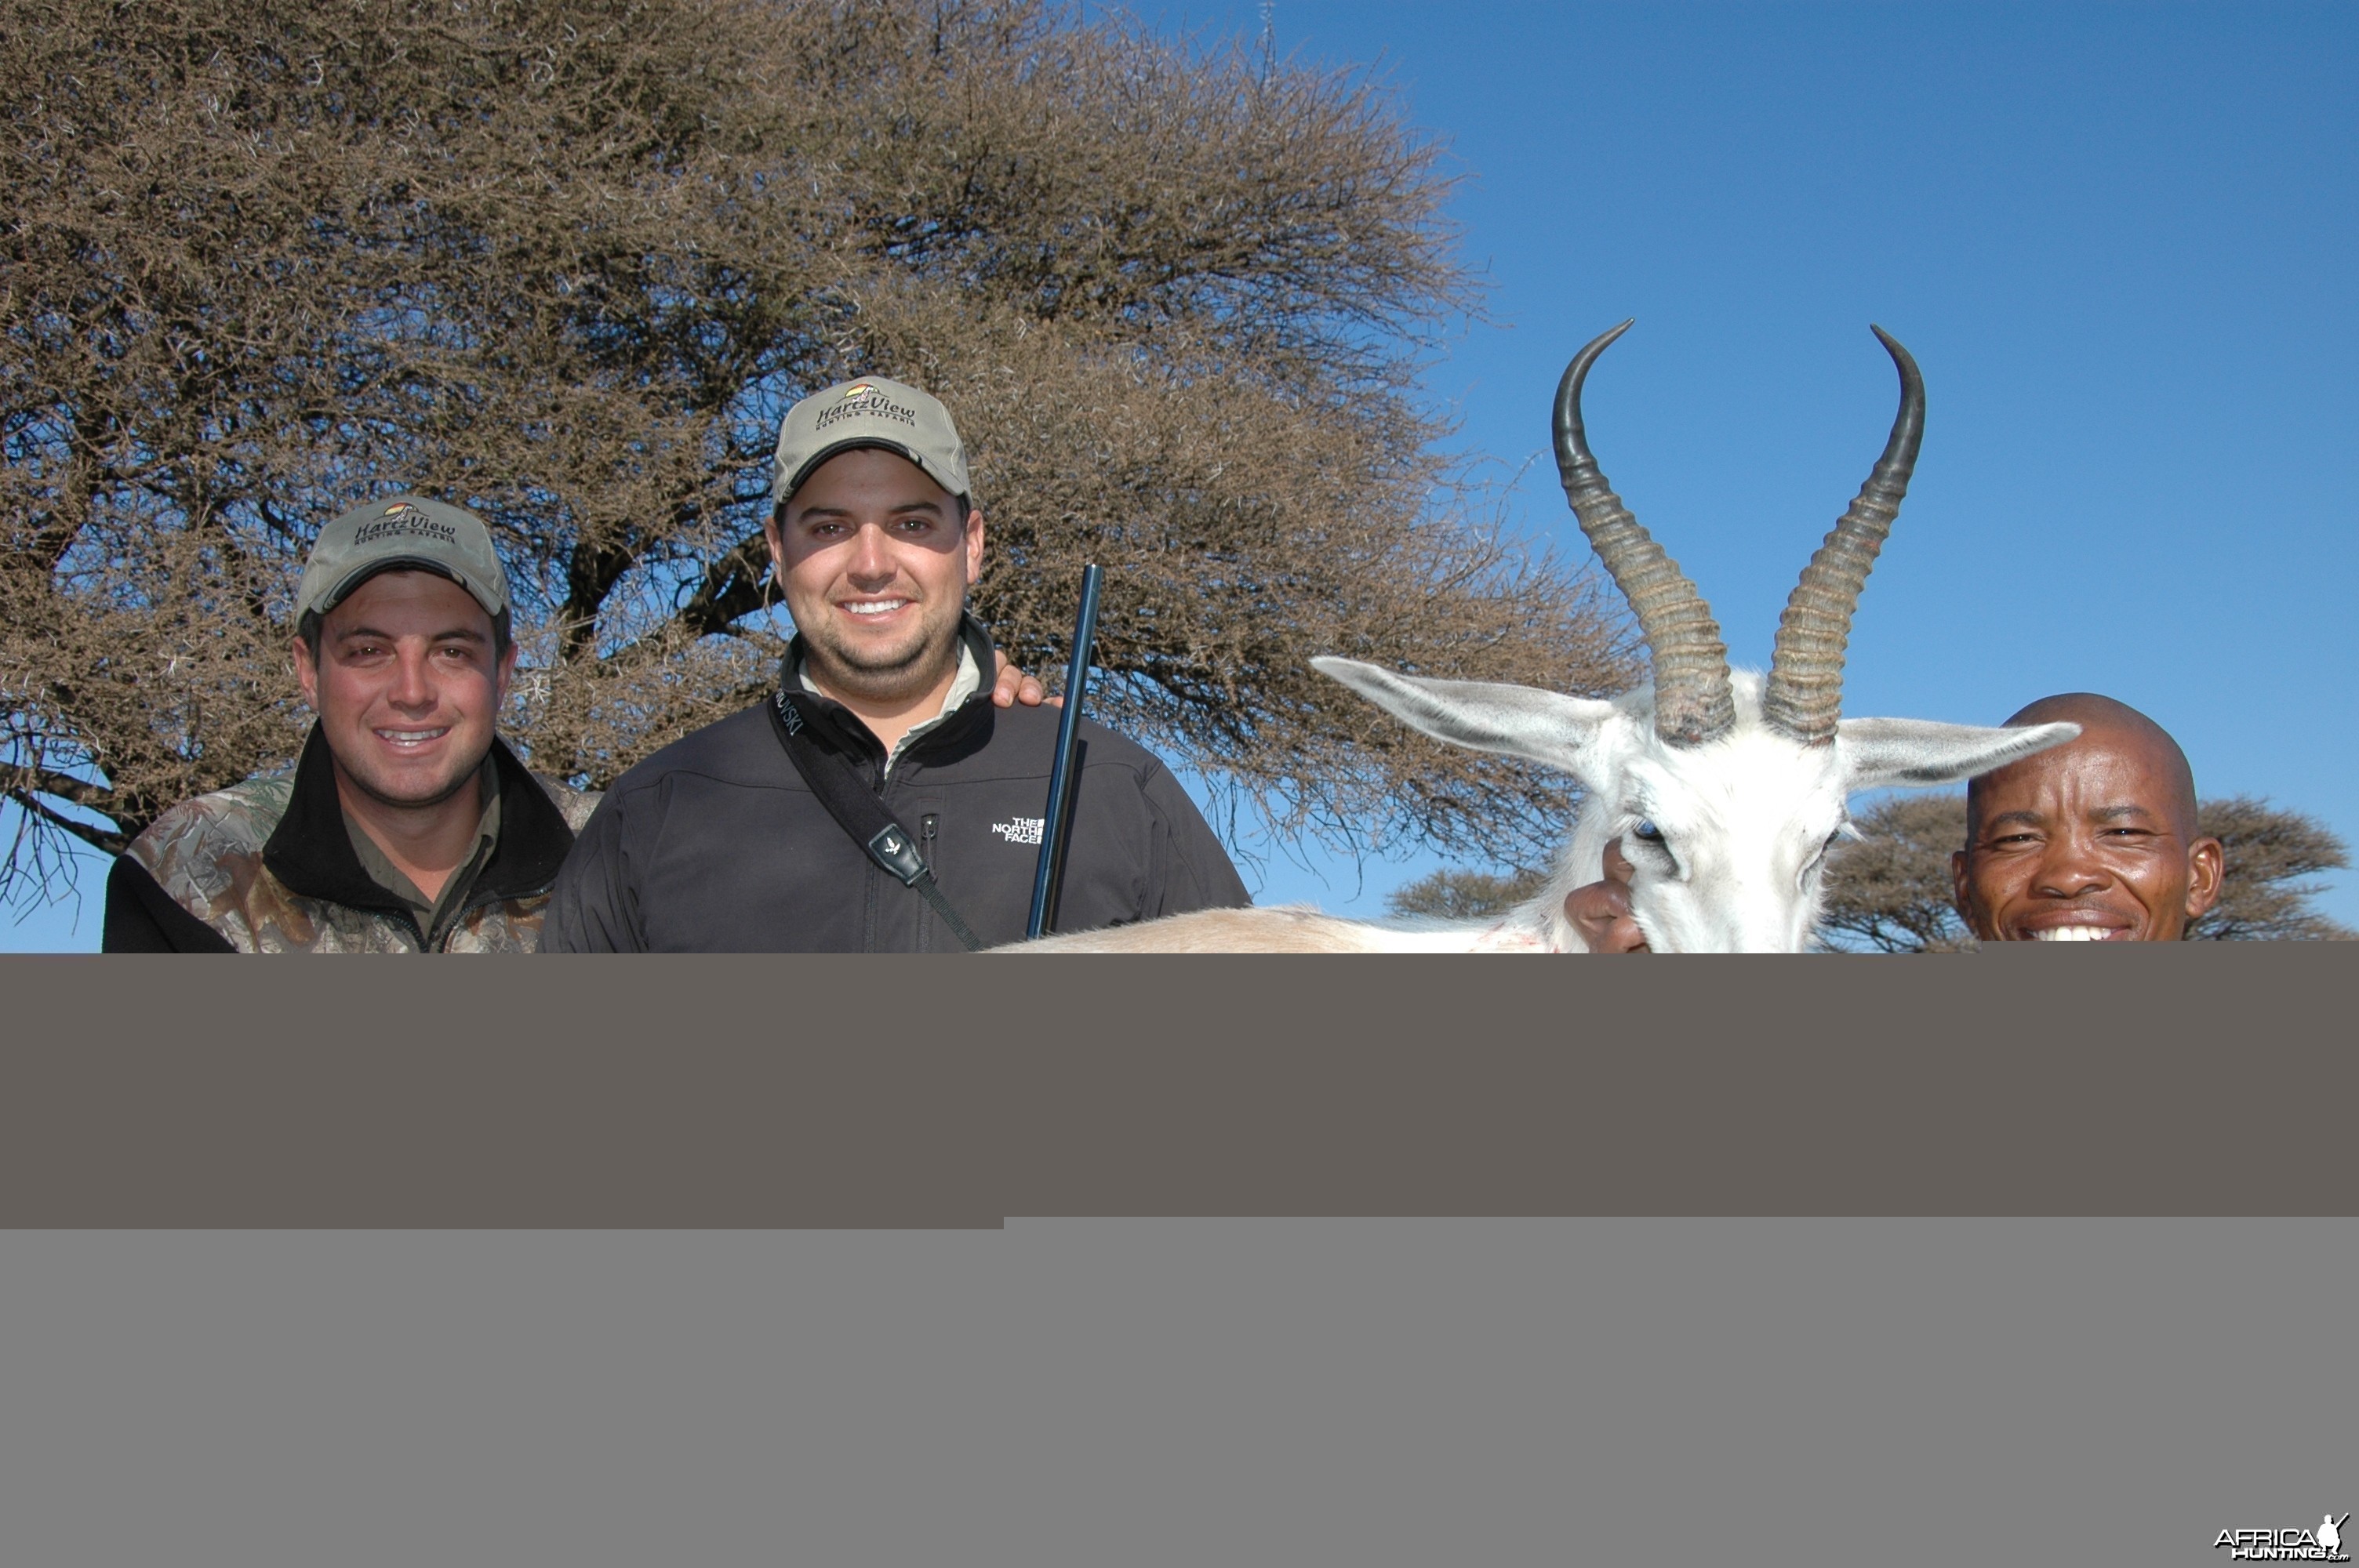 White Springbok hunted with Hartzview Hunting Safaris